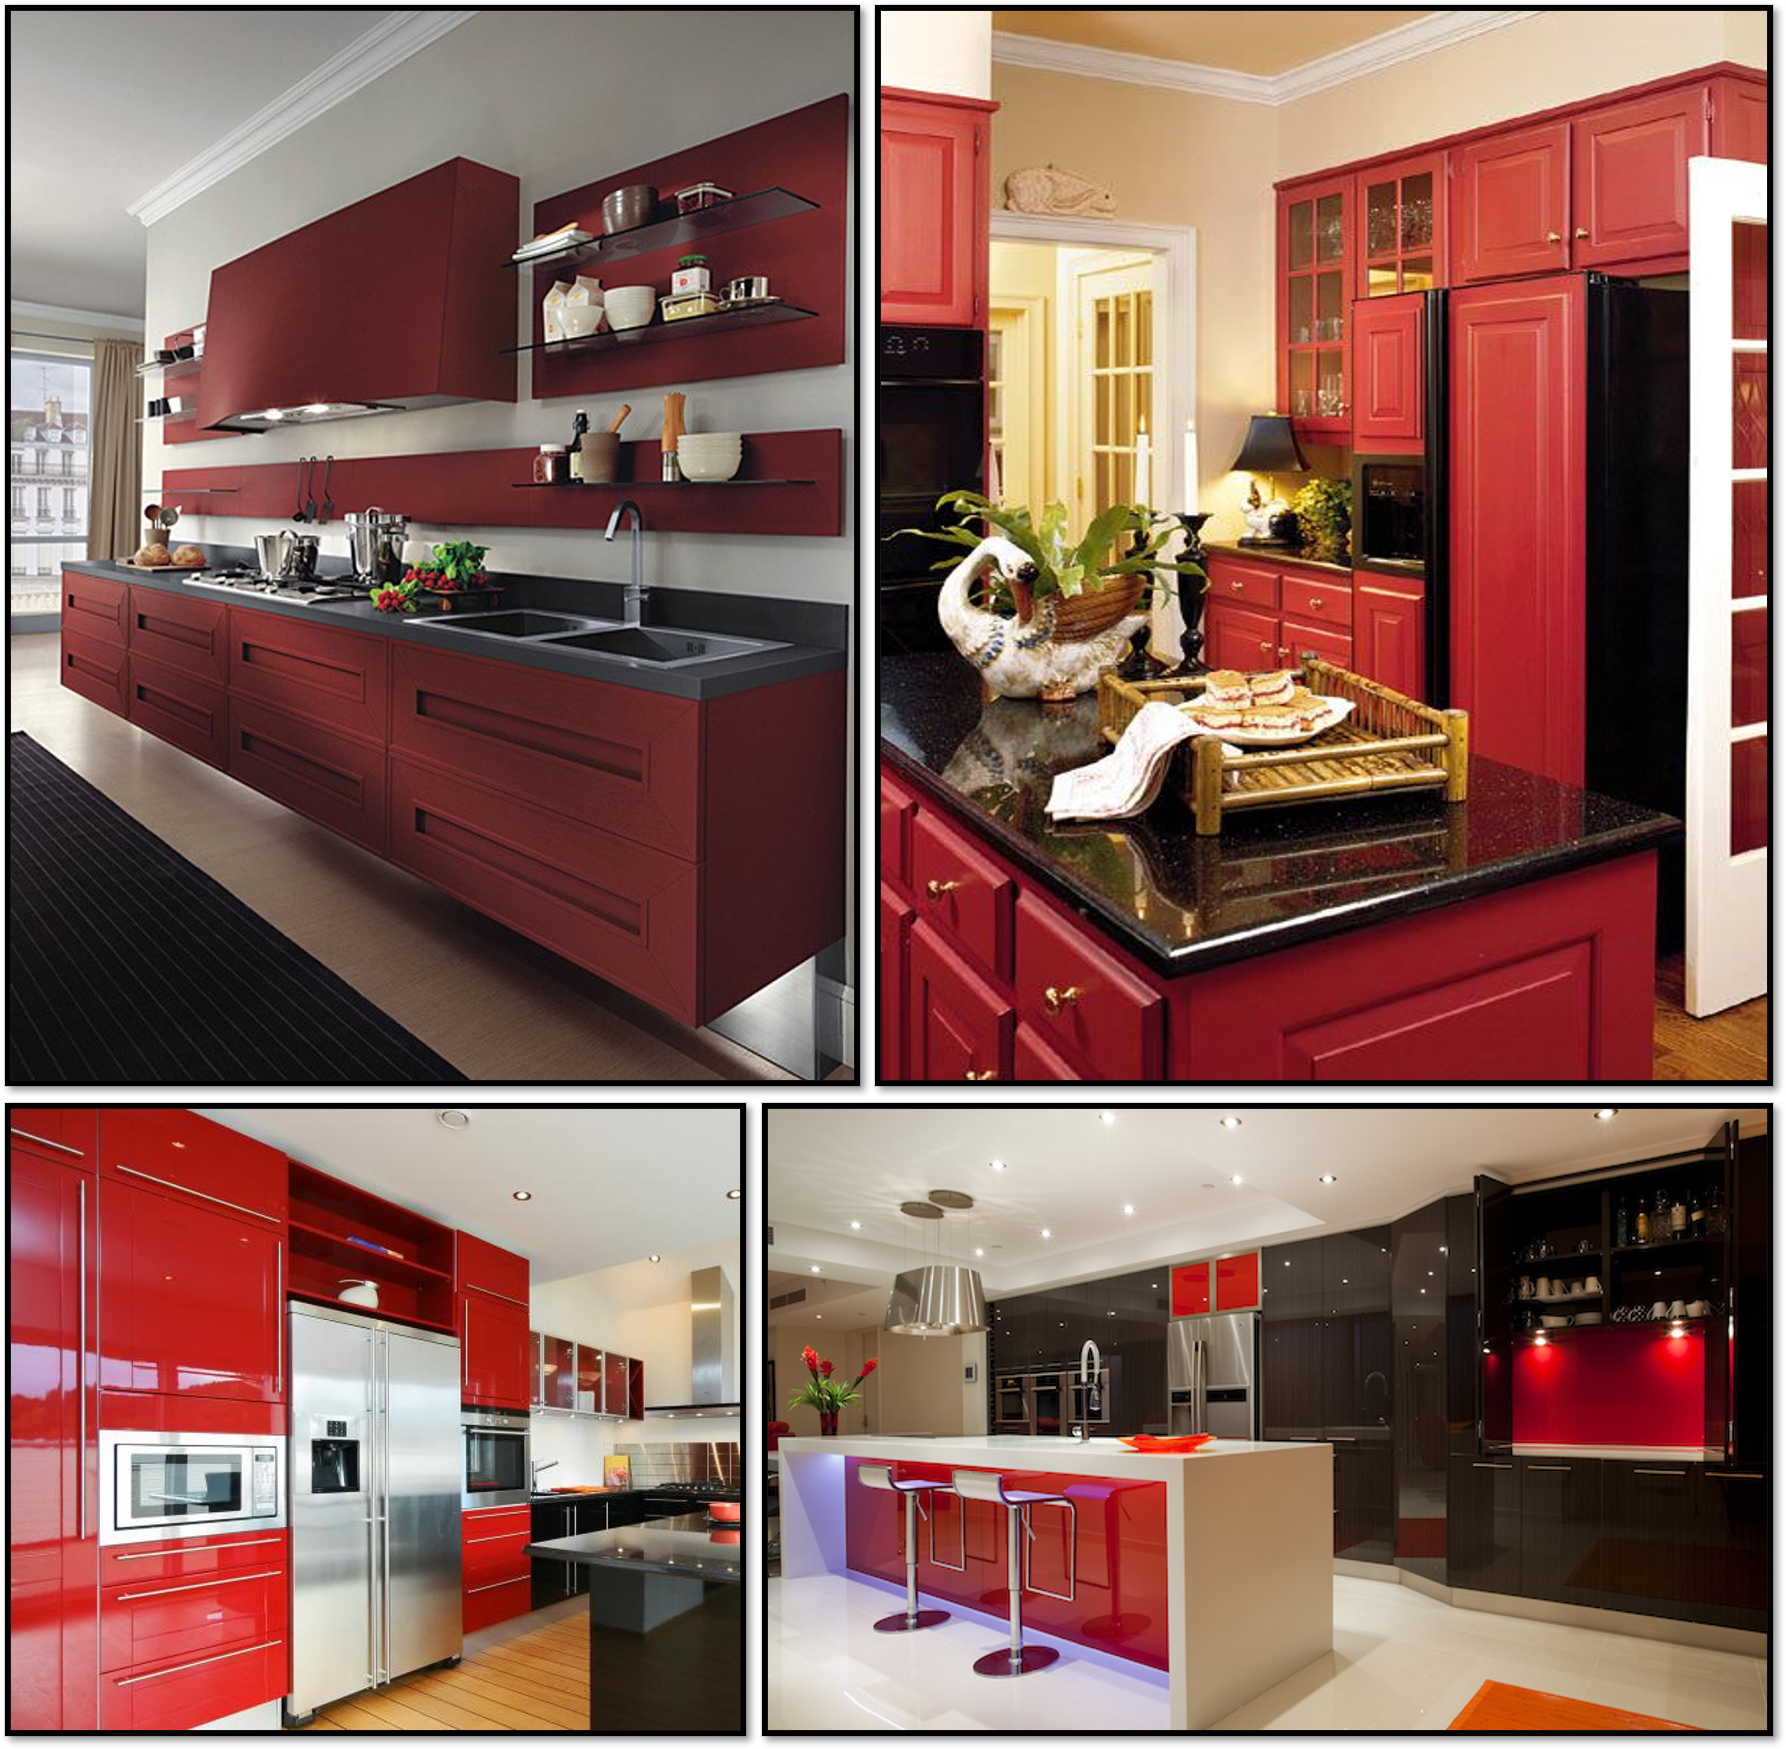 کابینت آشپزخانه قرمز